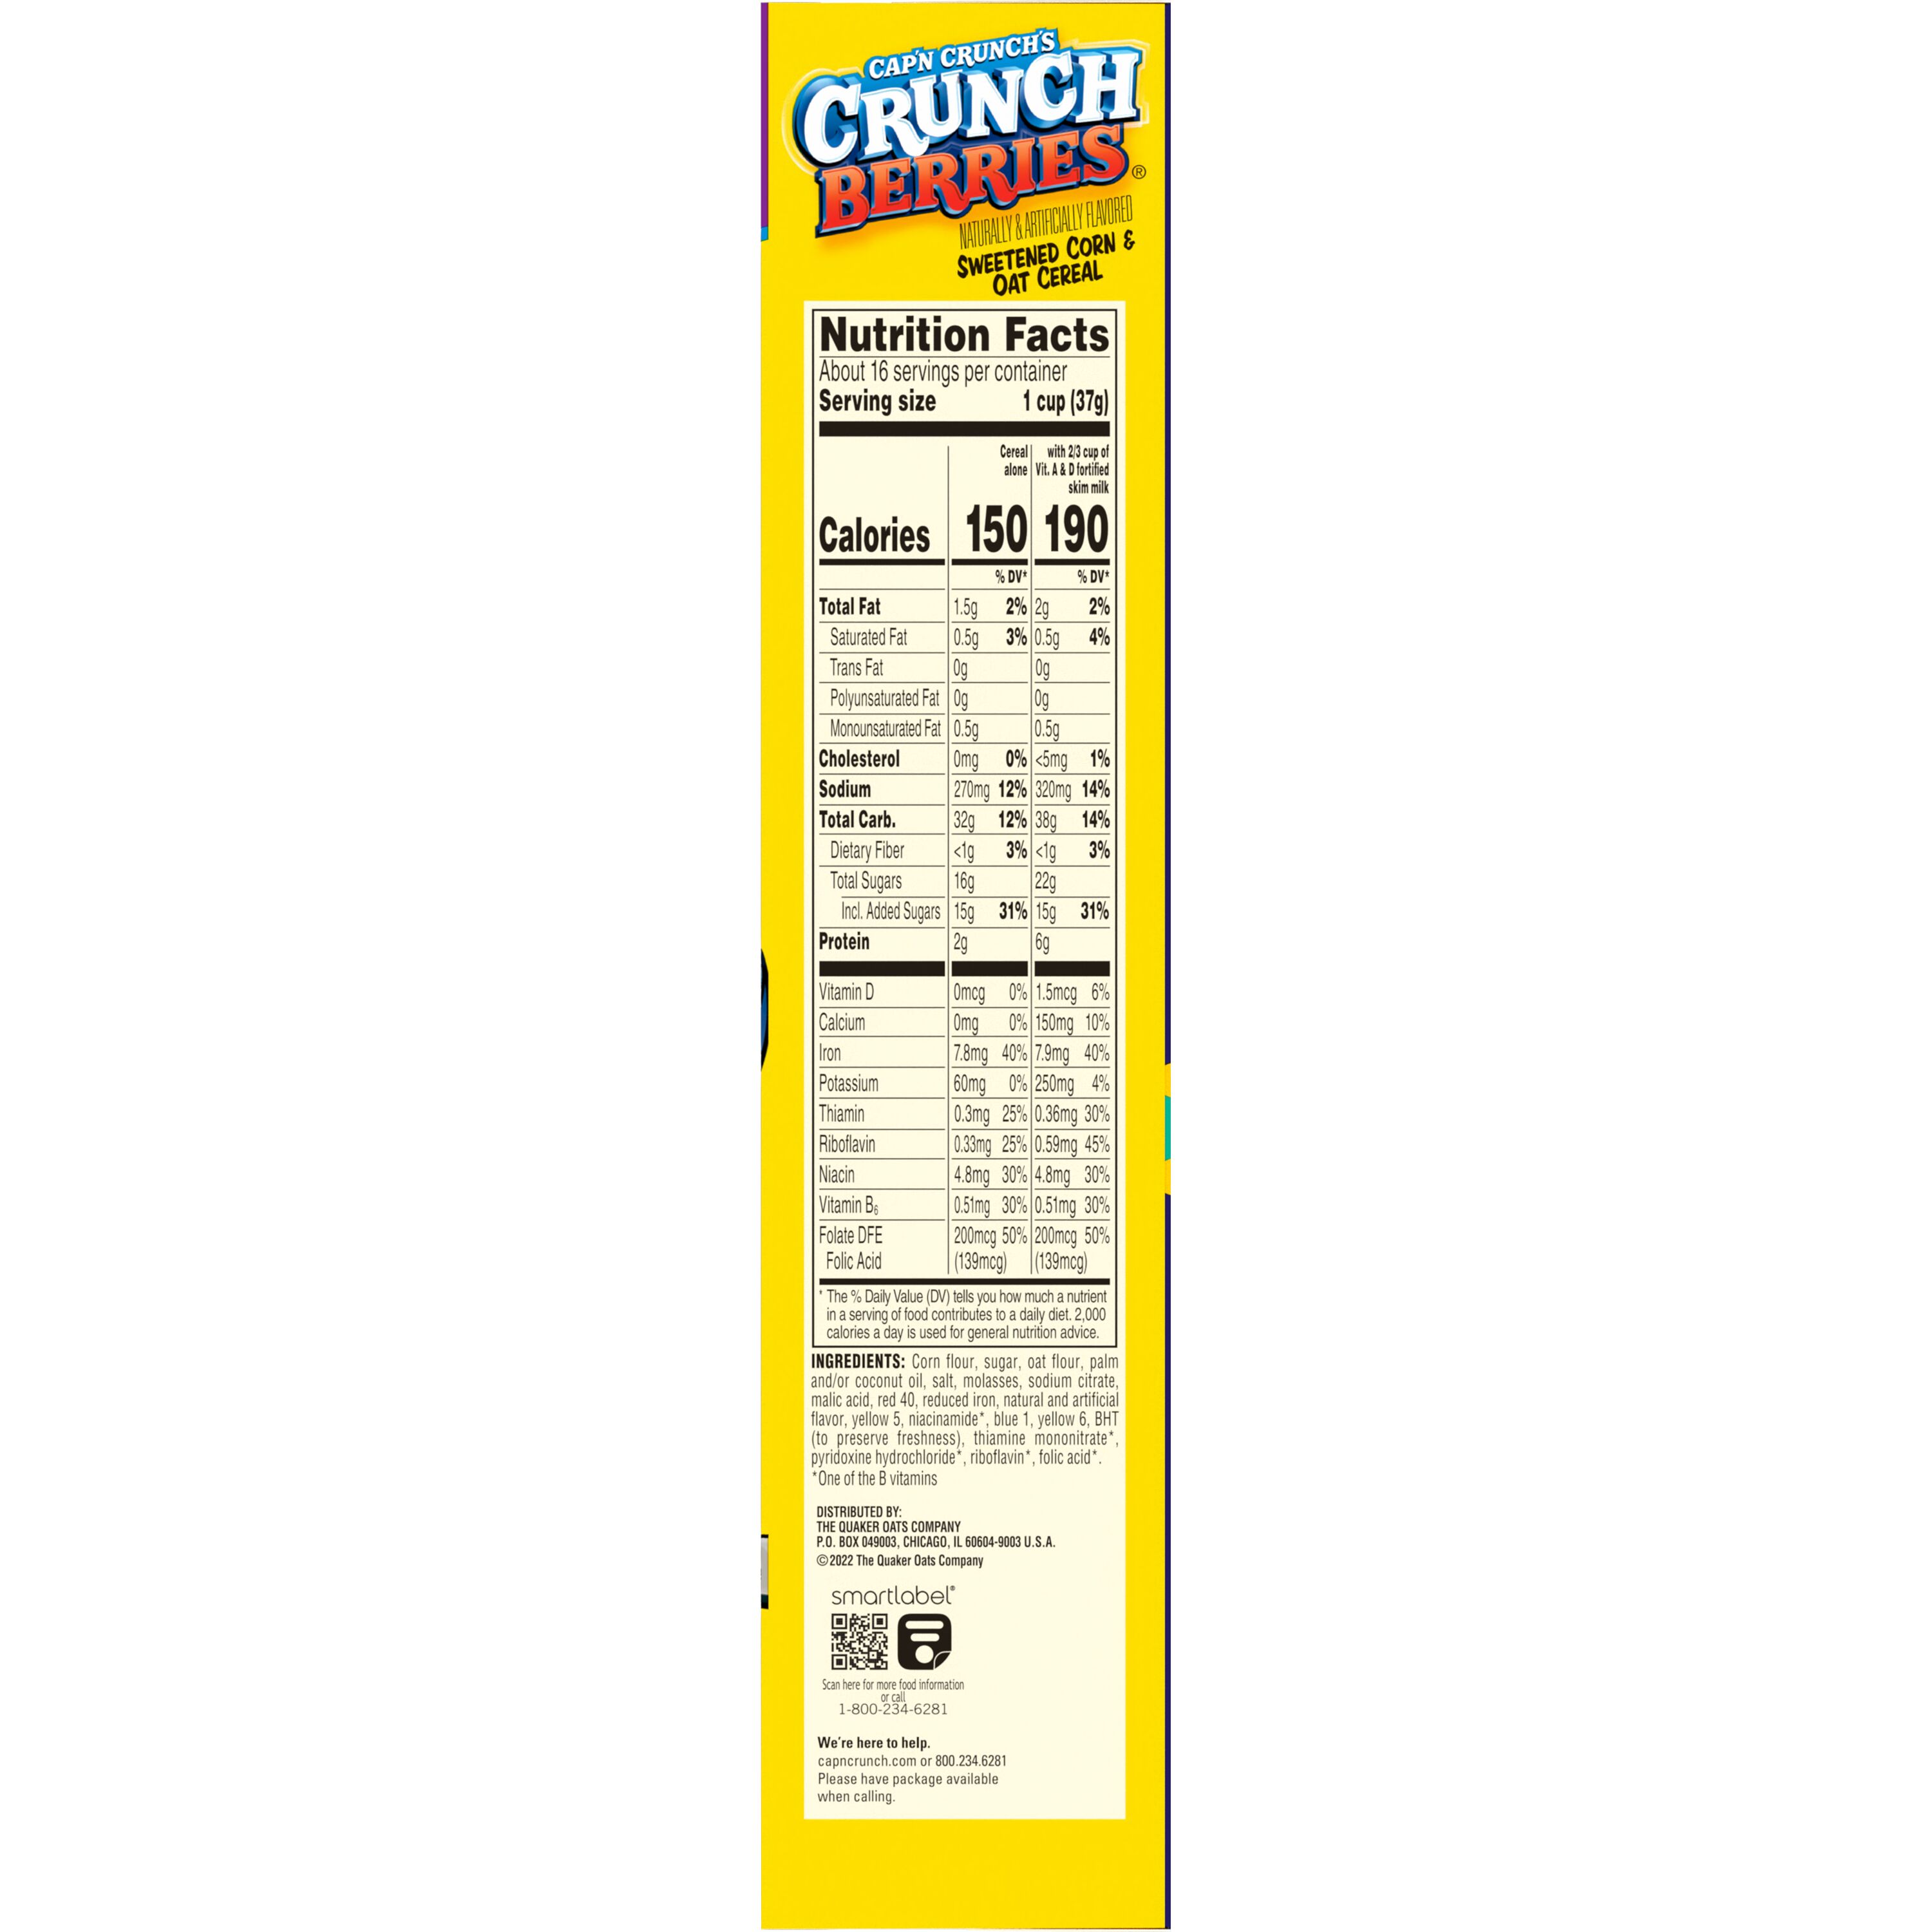 Cap'n Crunch's Crunch Berries, Kids Breakfast Cereal, 20.5 oz Box - image 5 of 11